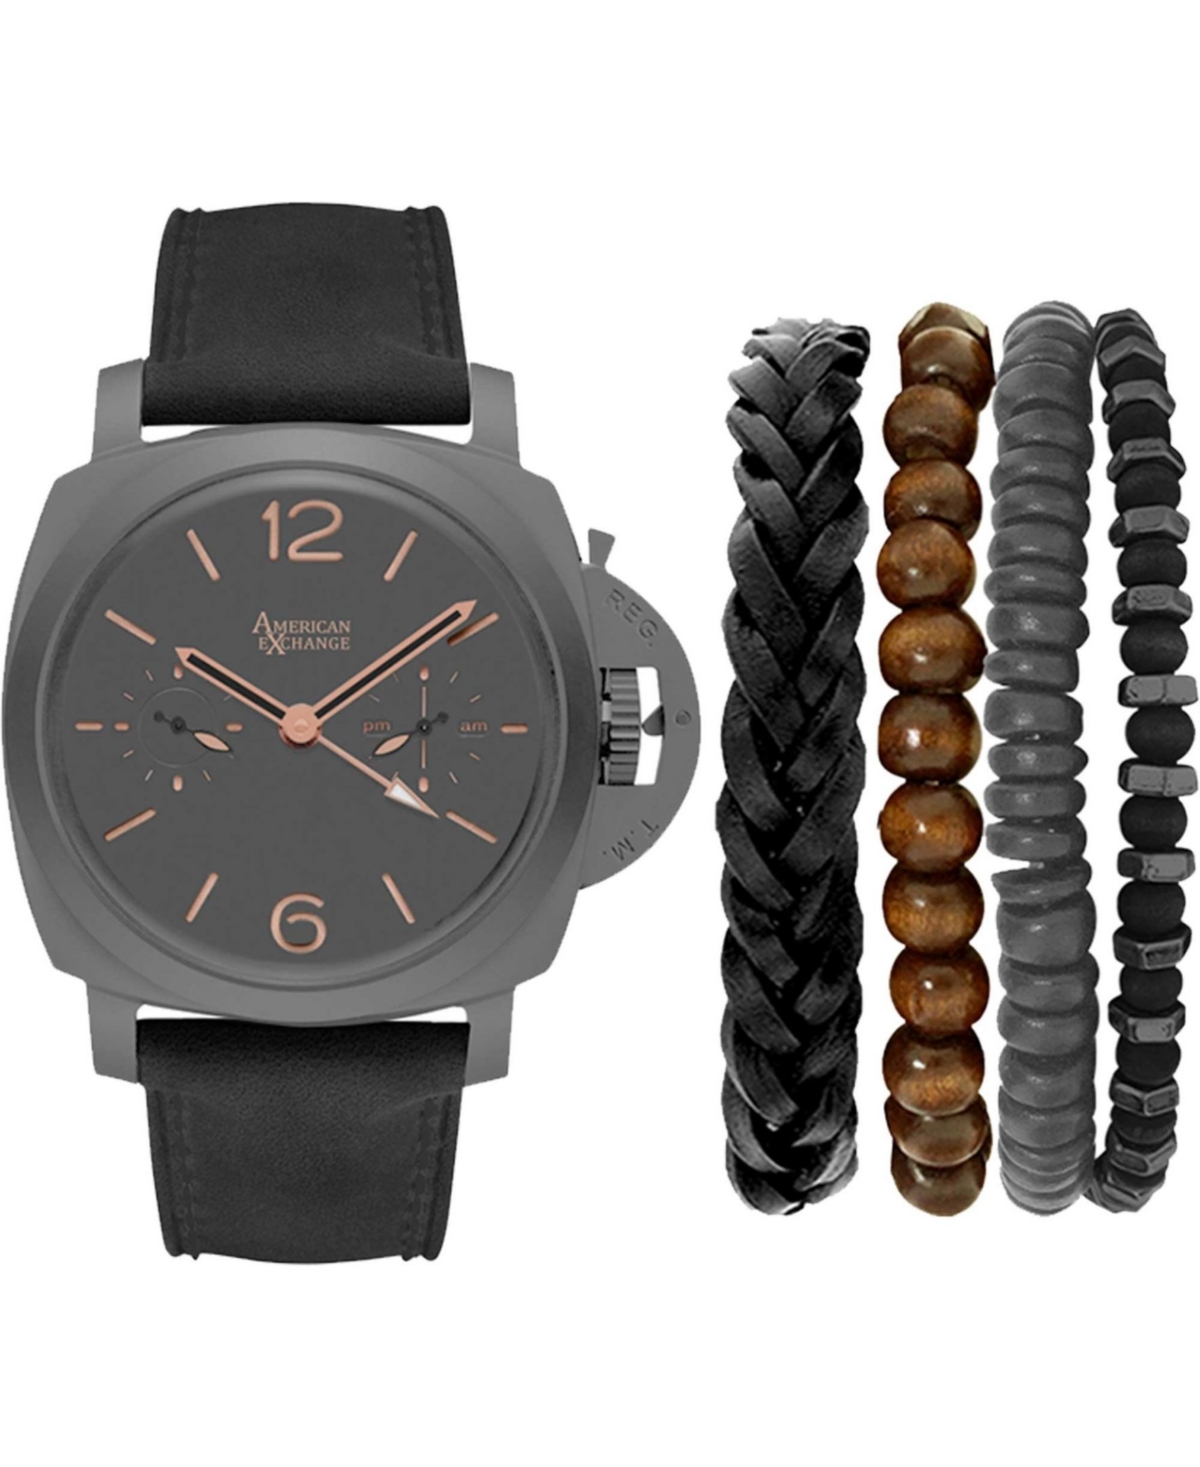 Men's Analog, Three-Hand Quartz Black Leather Strap Watch 44mm x 53mm Gift Set - Black